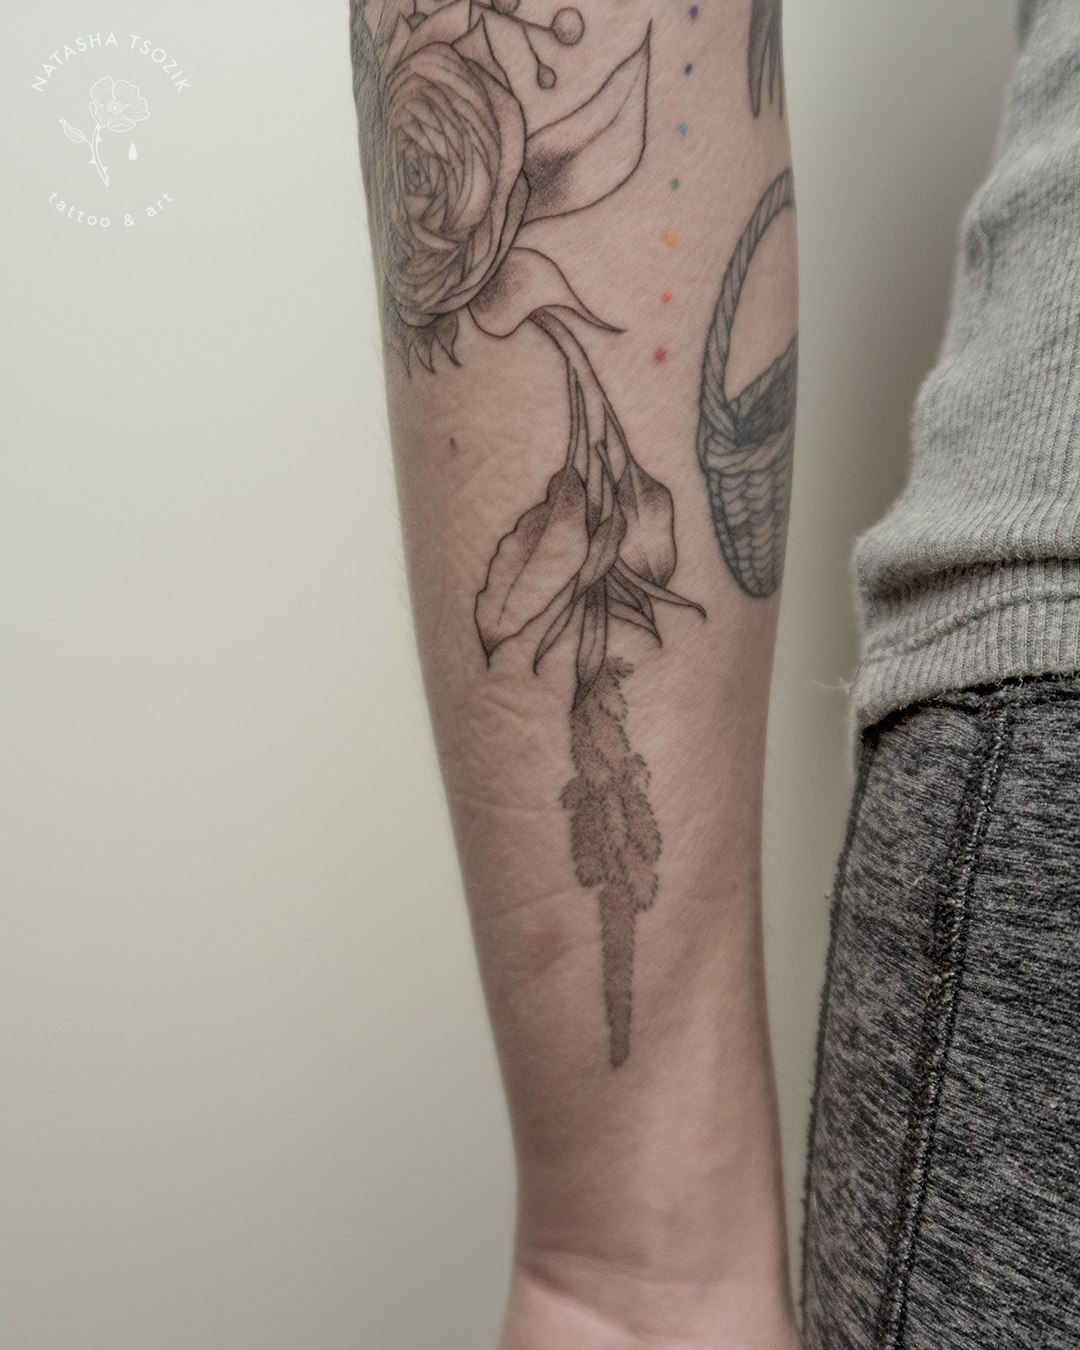 Tattoo by Natasha Tsozik